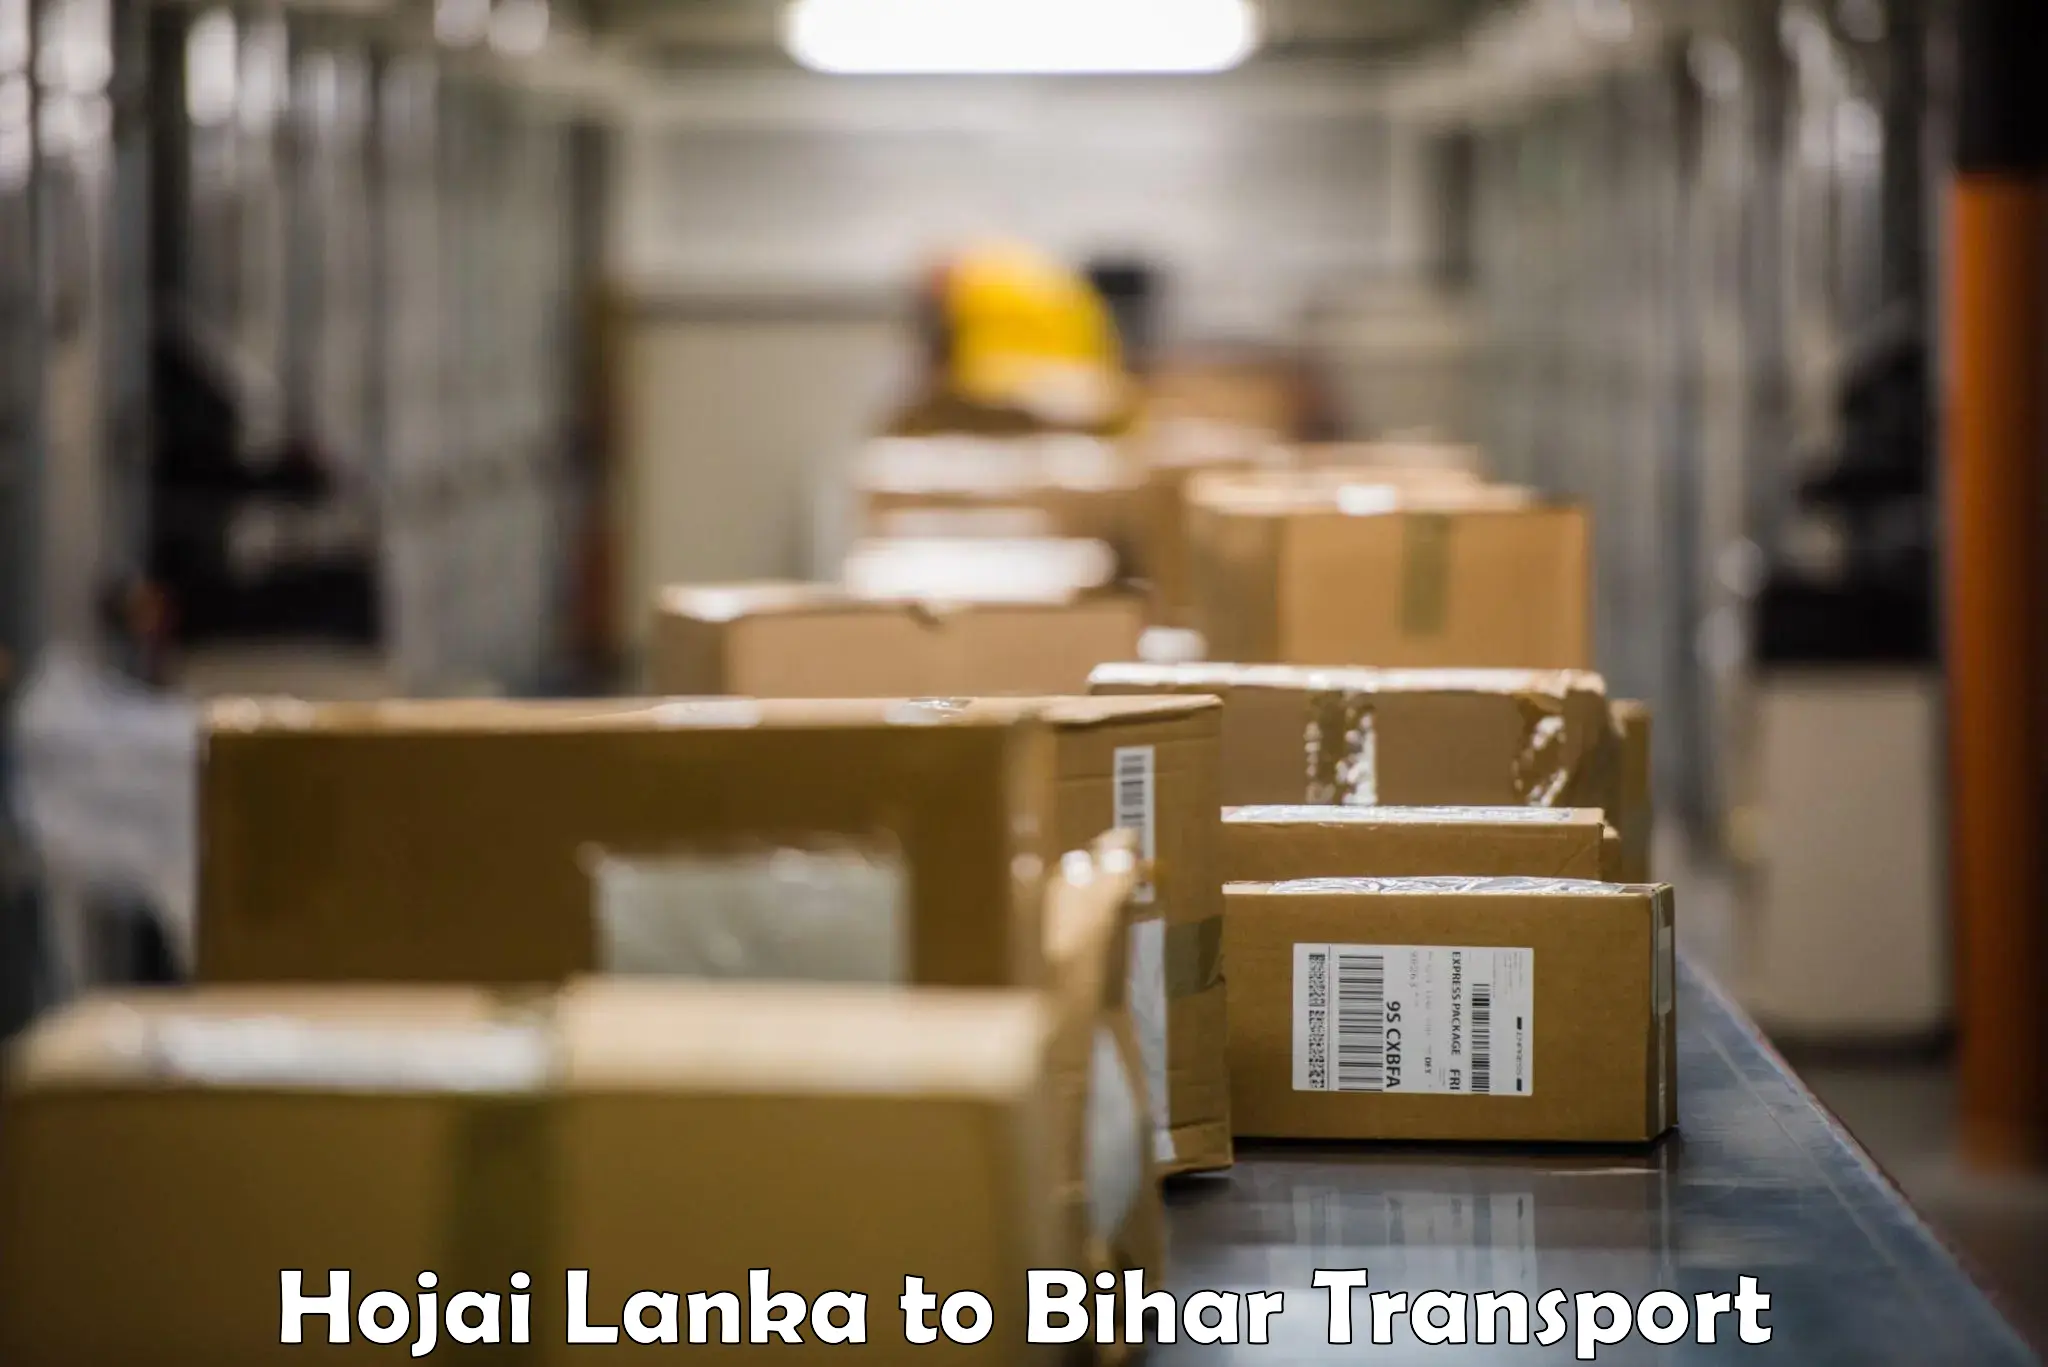 Part load transport service in India Hojai Lanka to Manjhaul